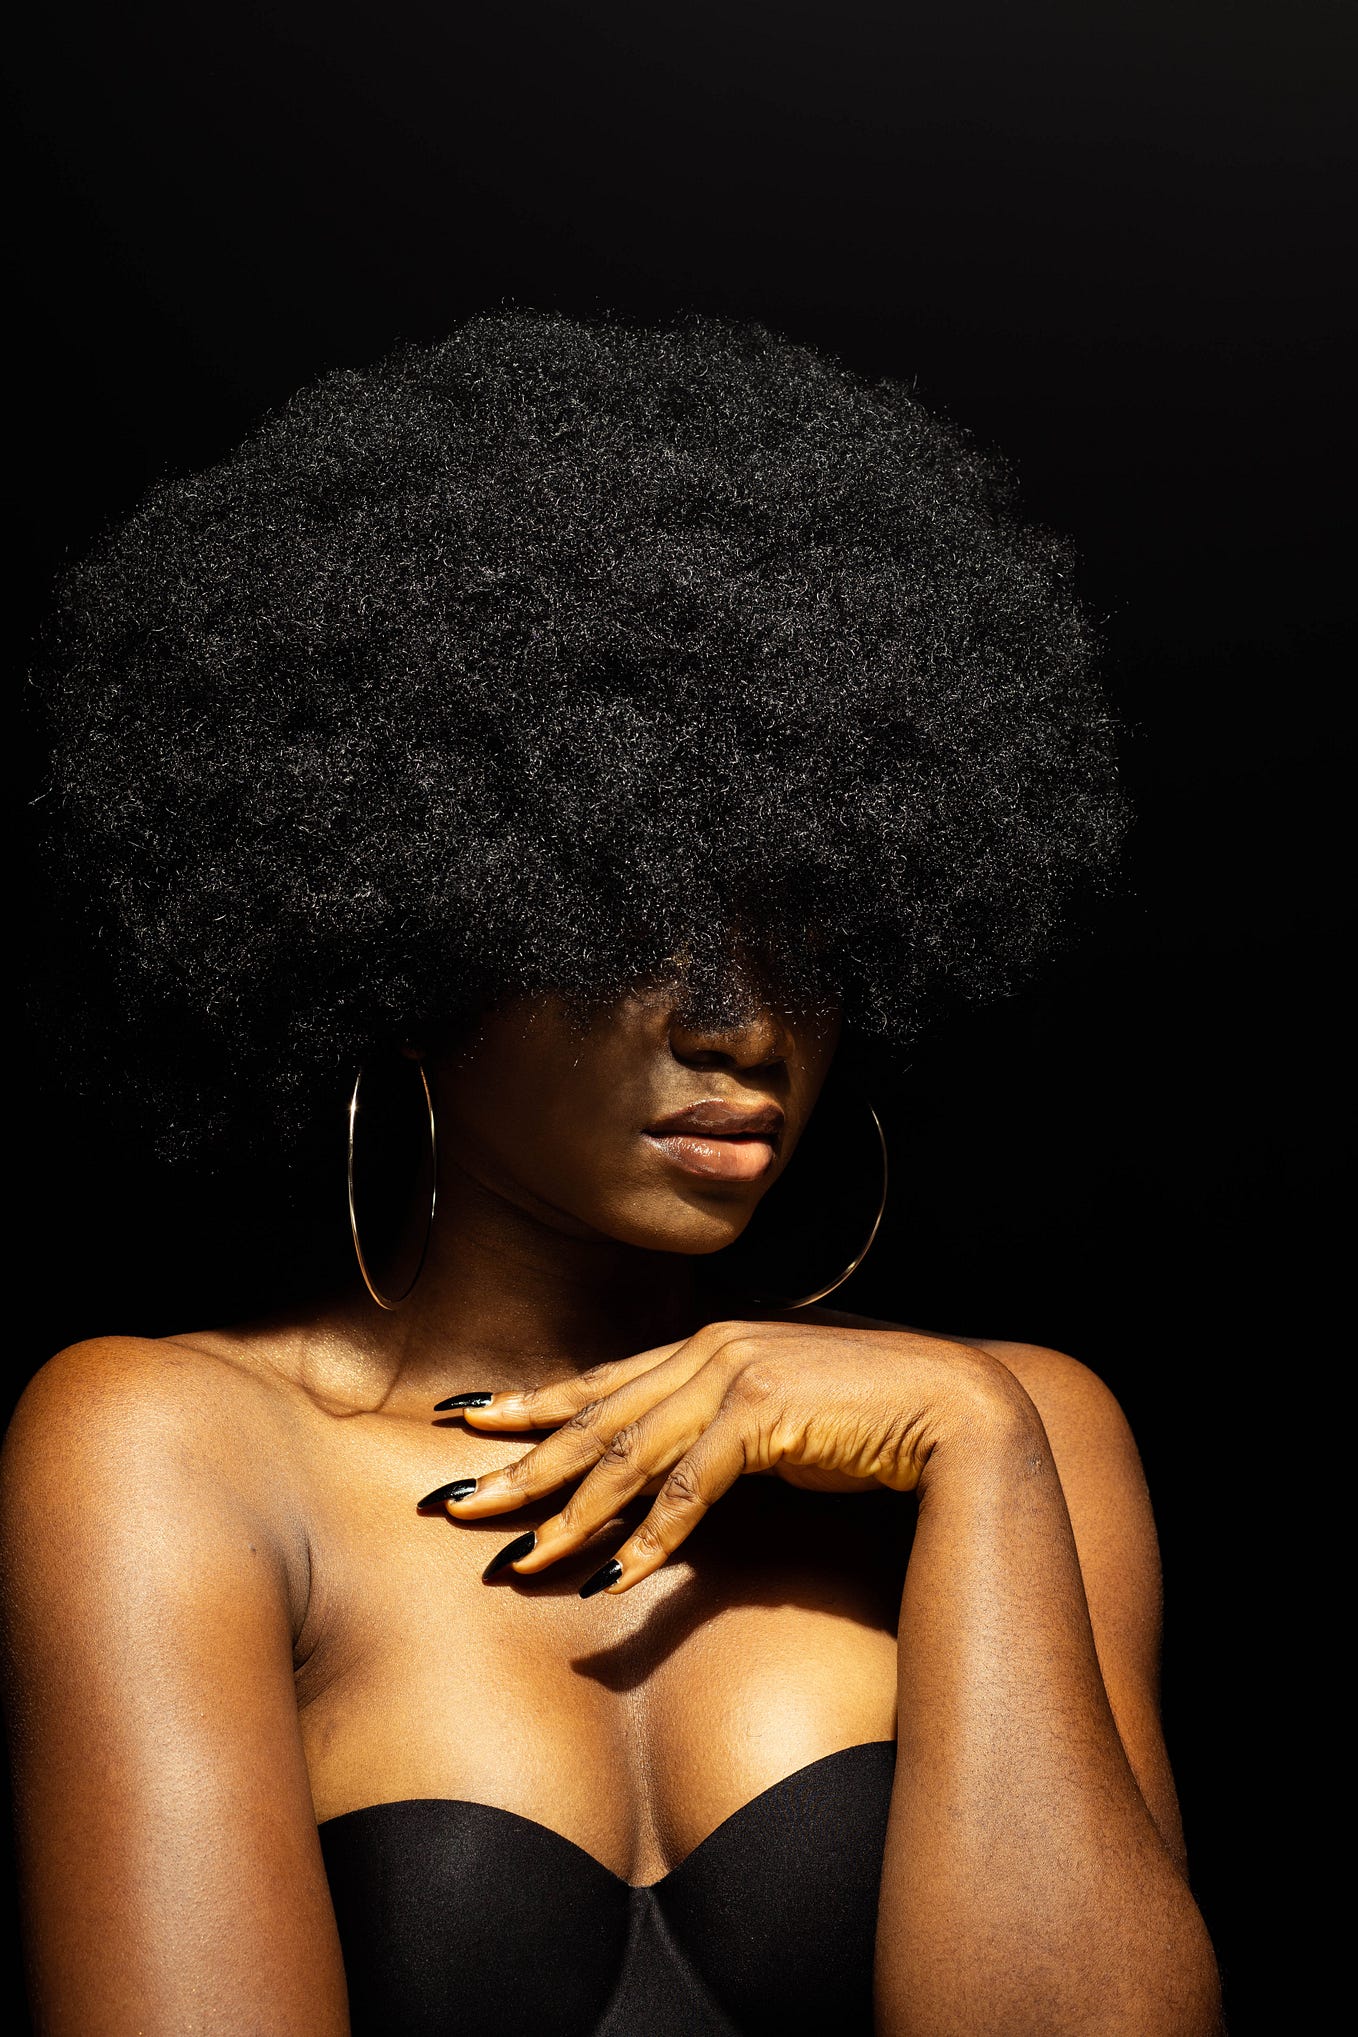 Smash or Pass: Black Woman Edition? - Sexuality